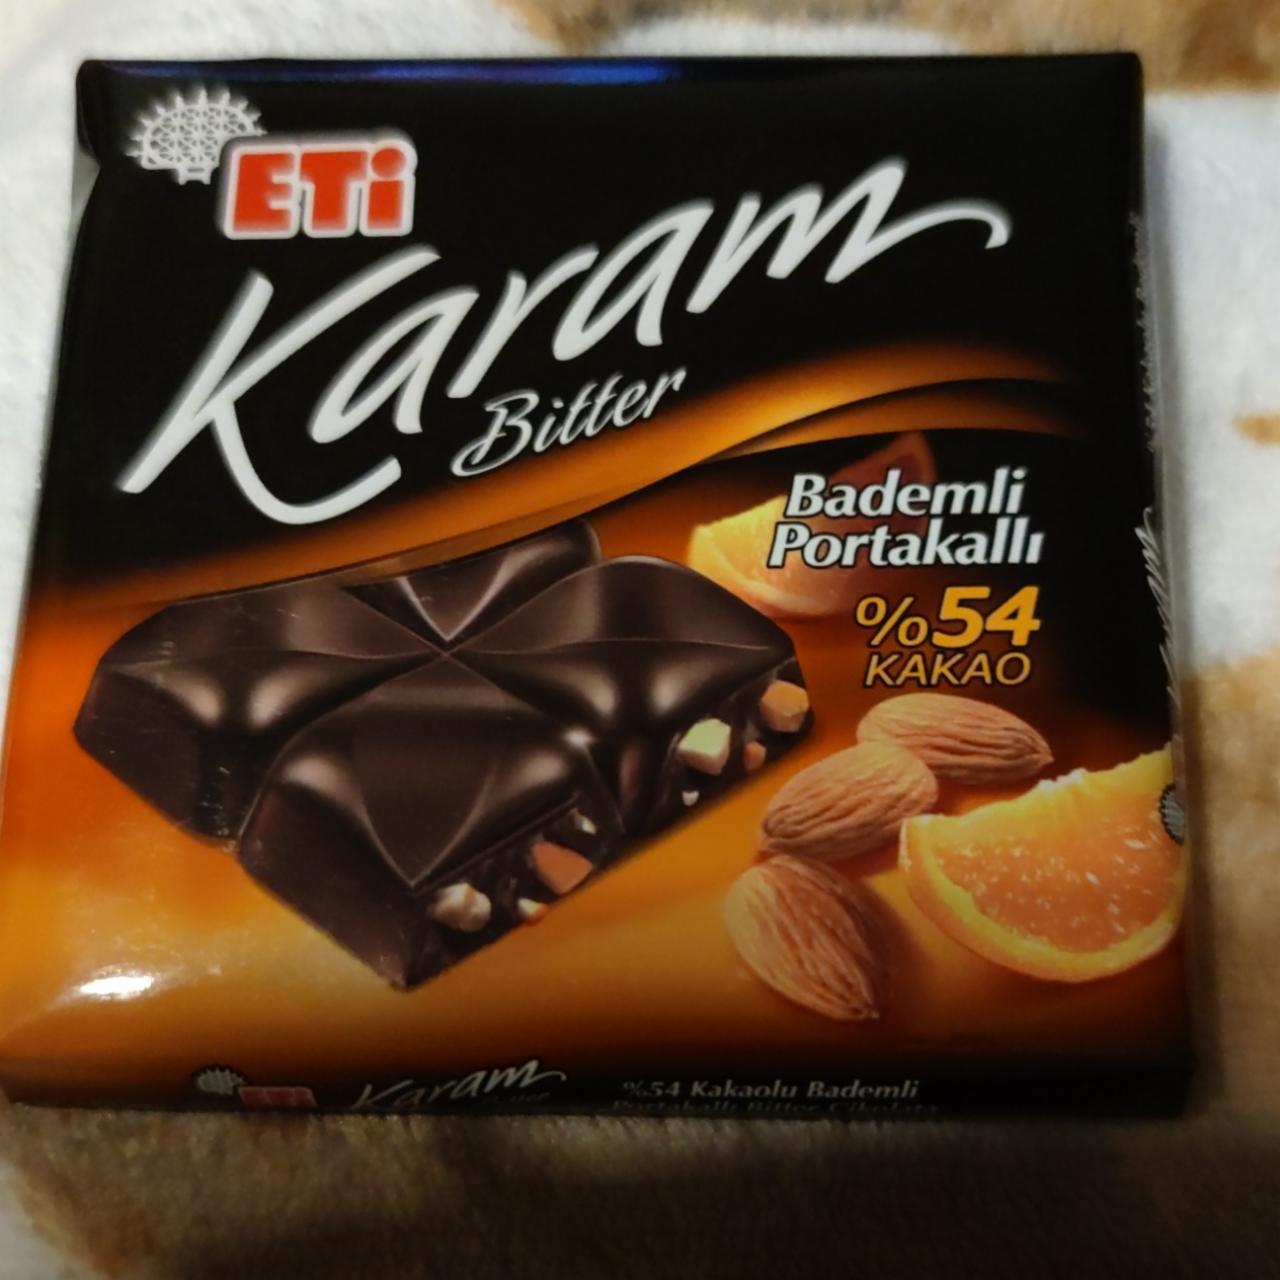 Fotografie - Karam Bitter %54 Kakao Badem Portakallı Eti